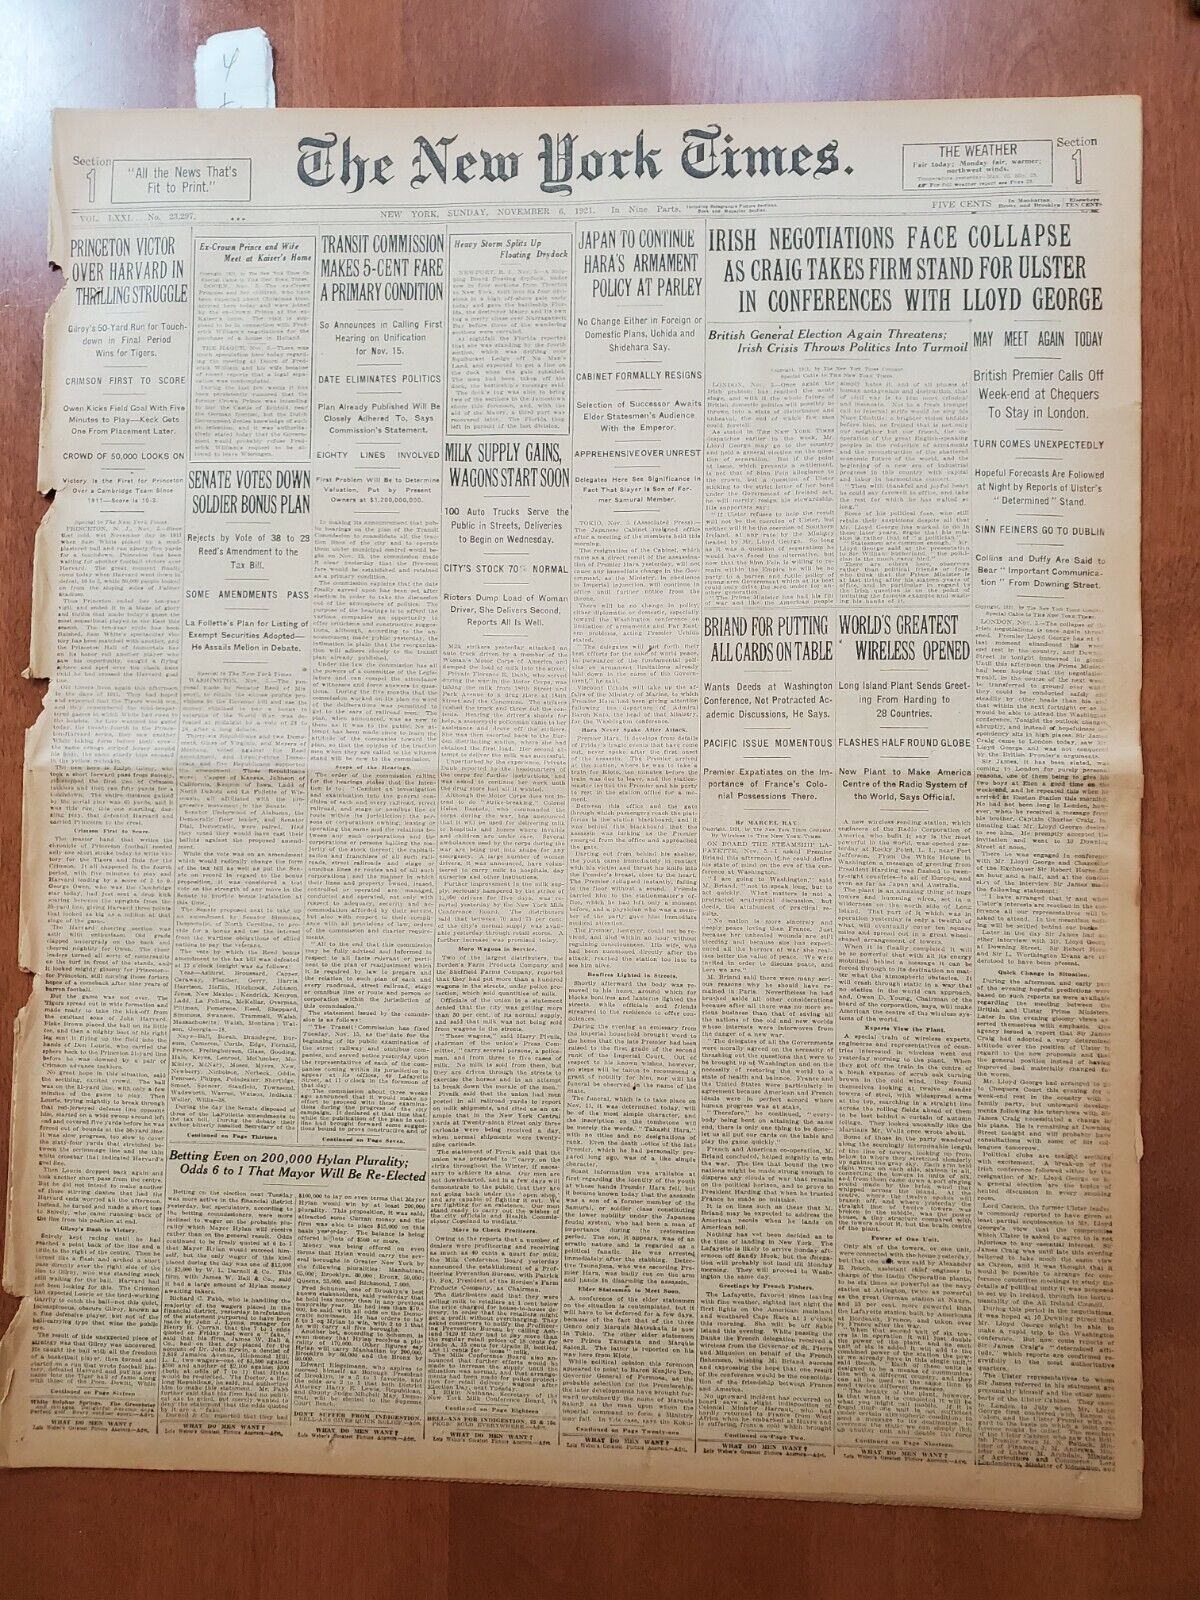 1921 NOVEMBER 6 NEW YORK TIMES - WORLD'S GREATEST WIRELESS OPENED - NT 8023